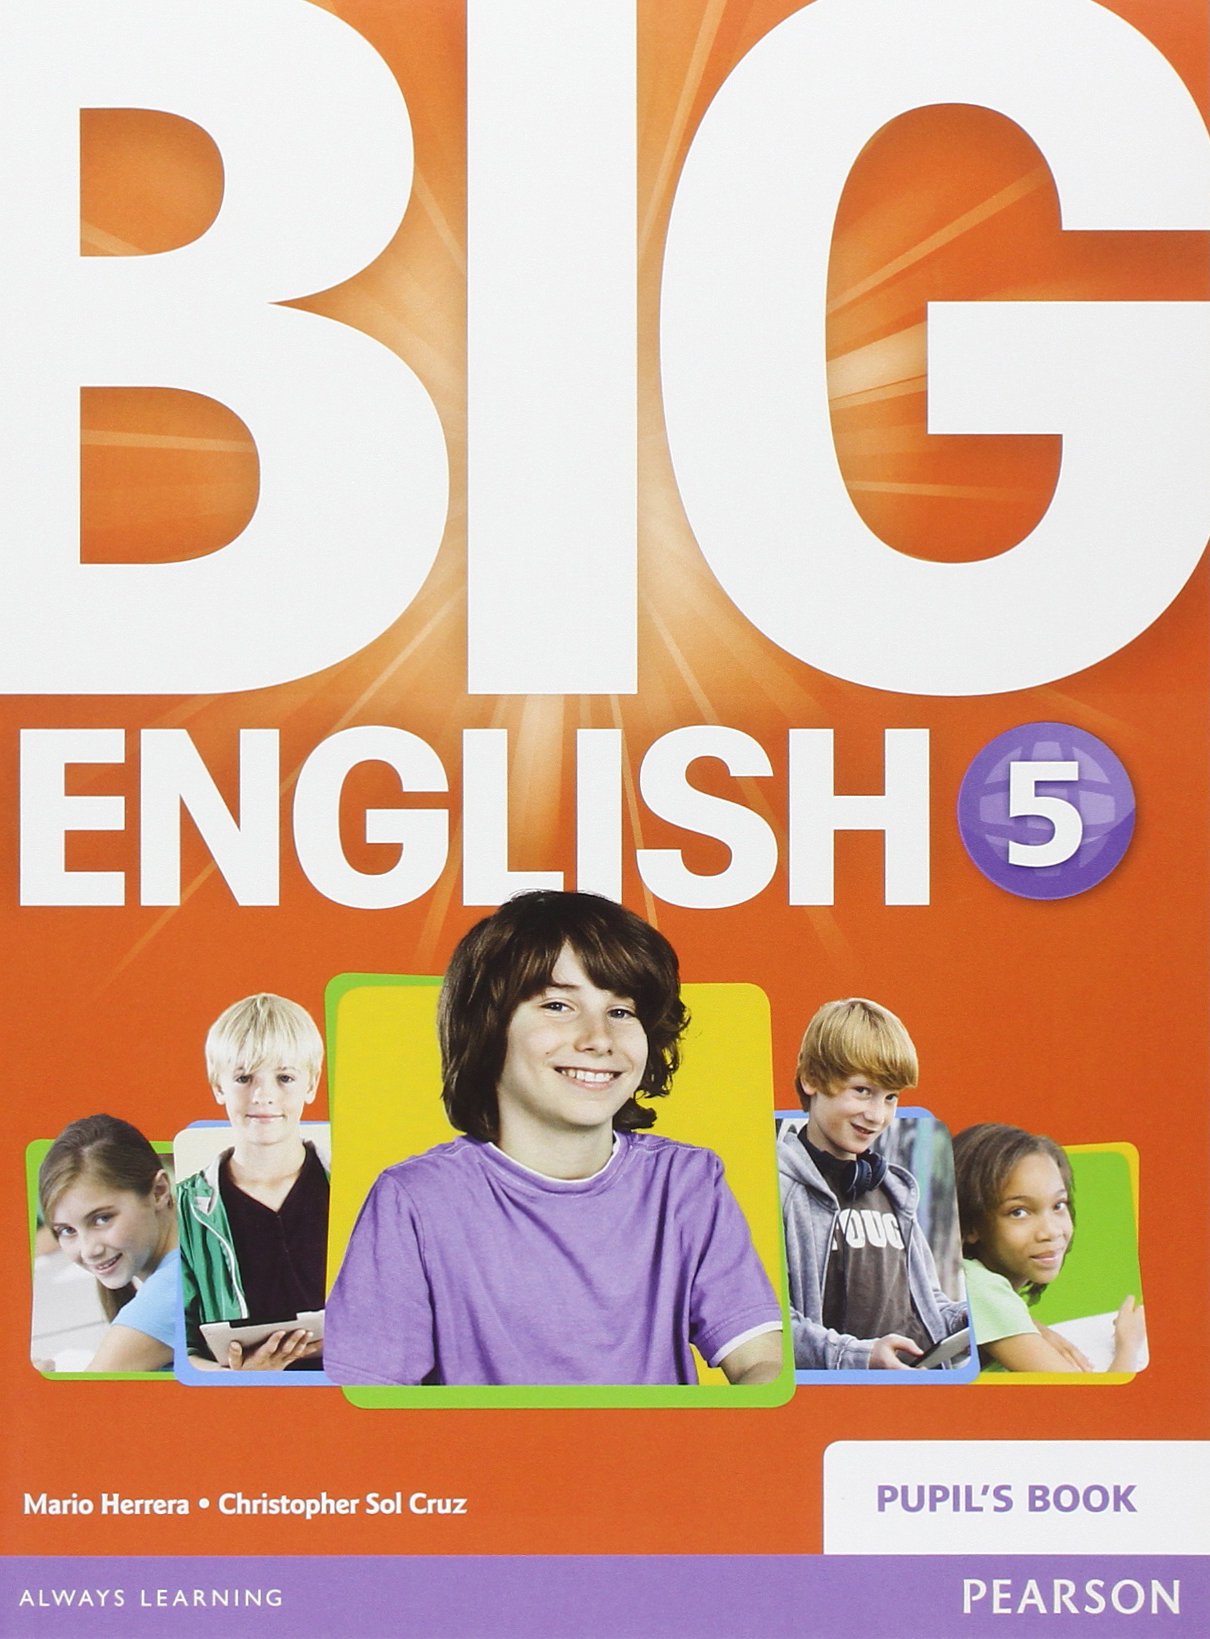 BIG ENGLISH 5 Pupil's Book